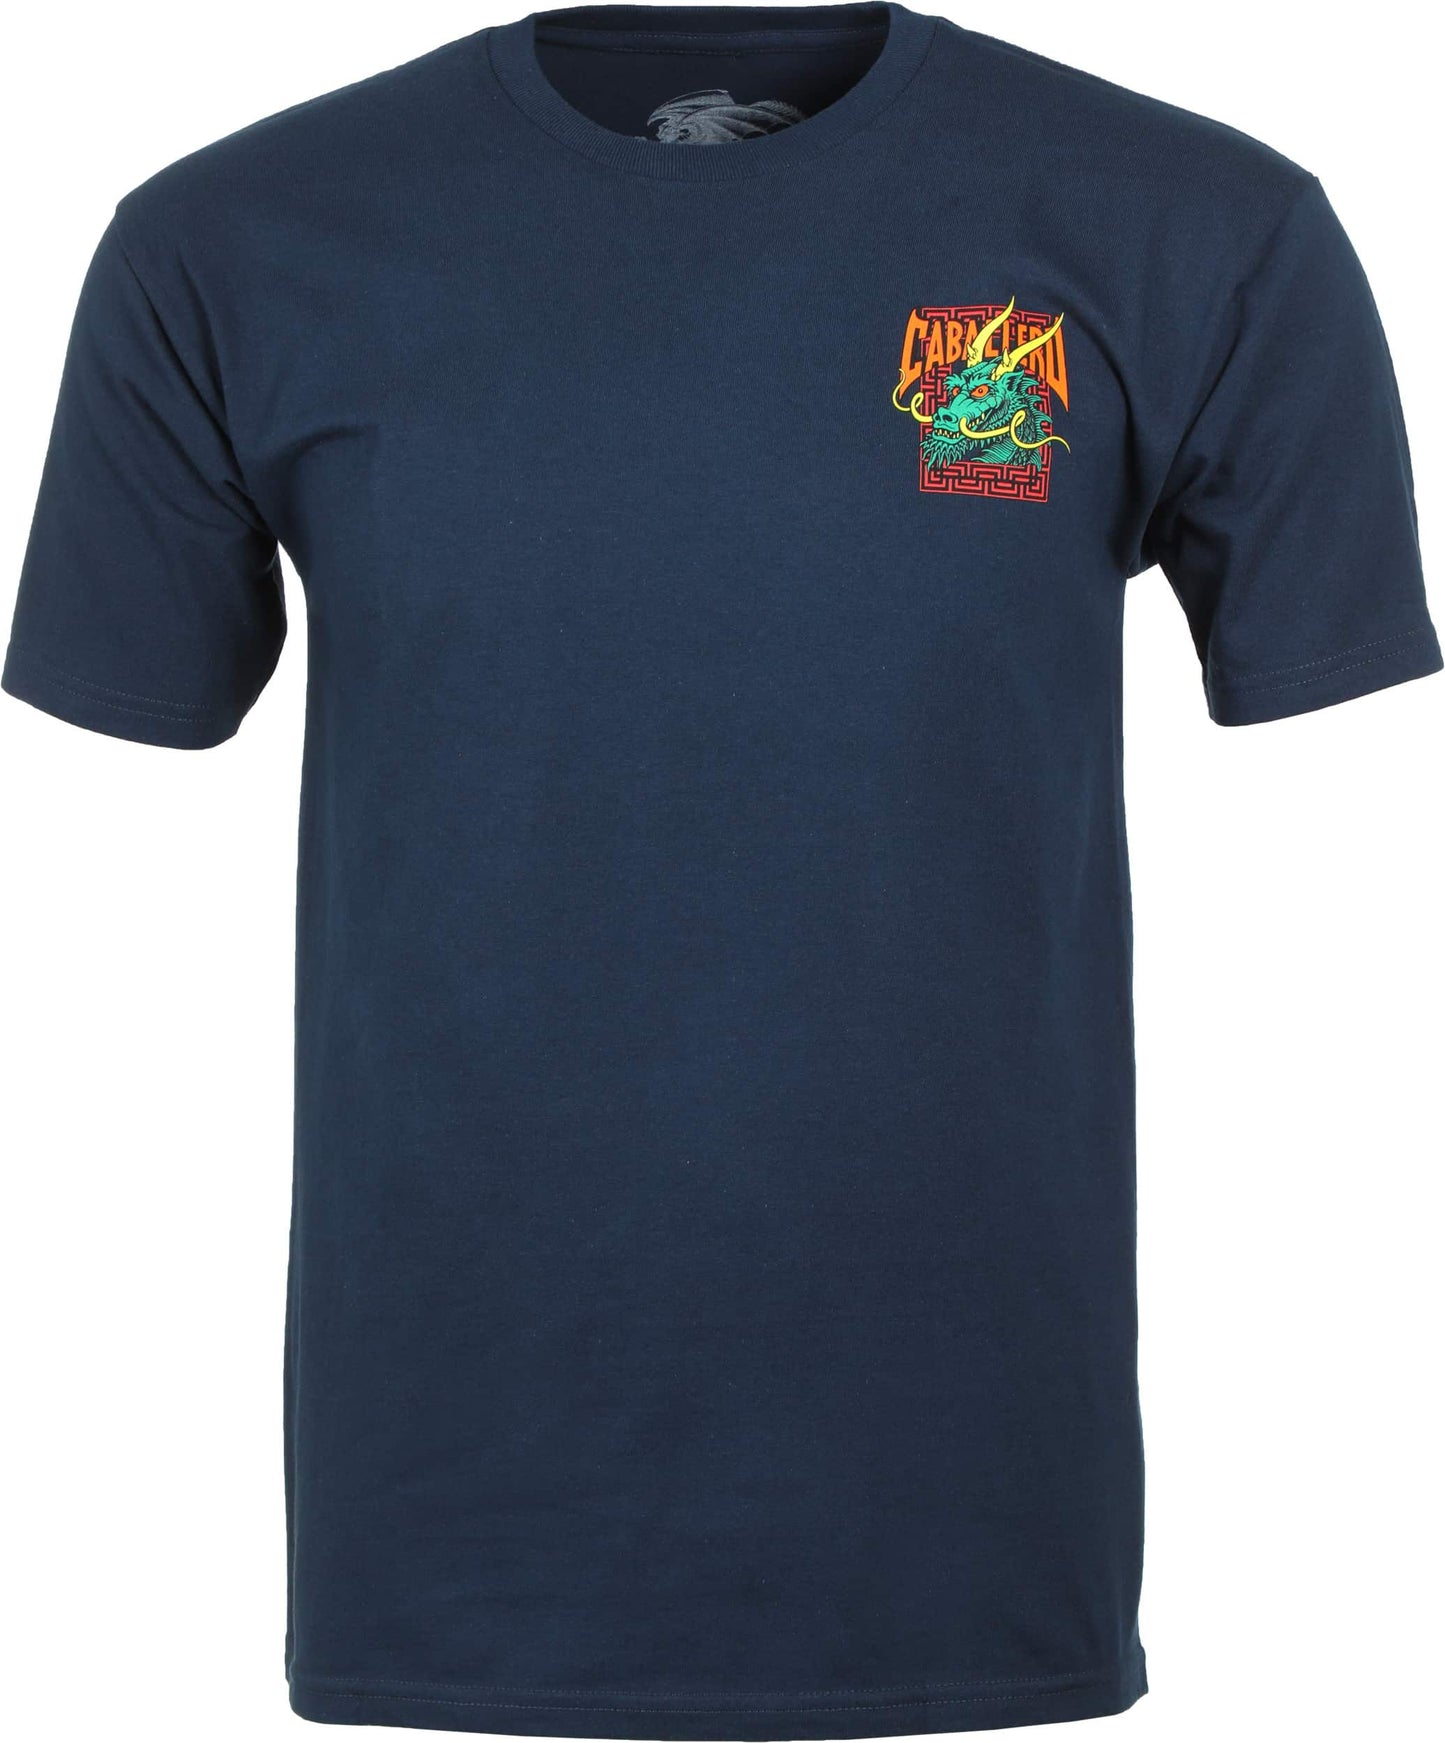 Powell Peralta Caballero Street Dragon T-Shirt Navy